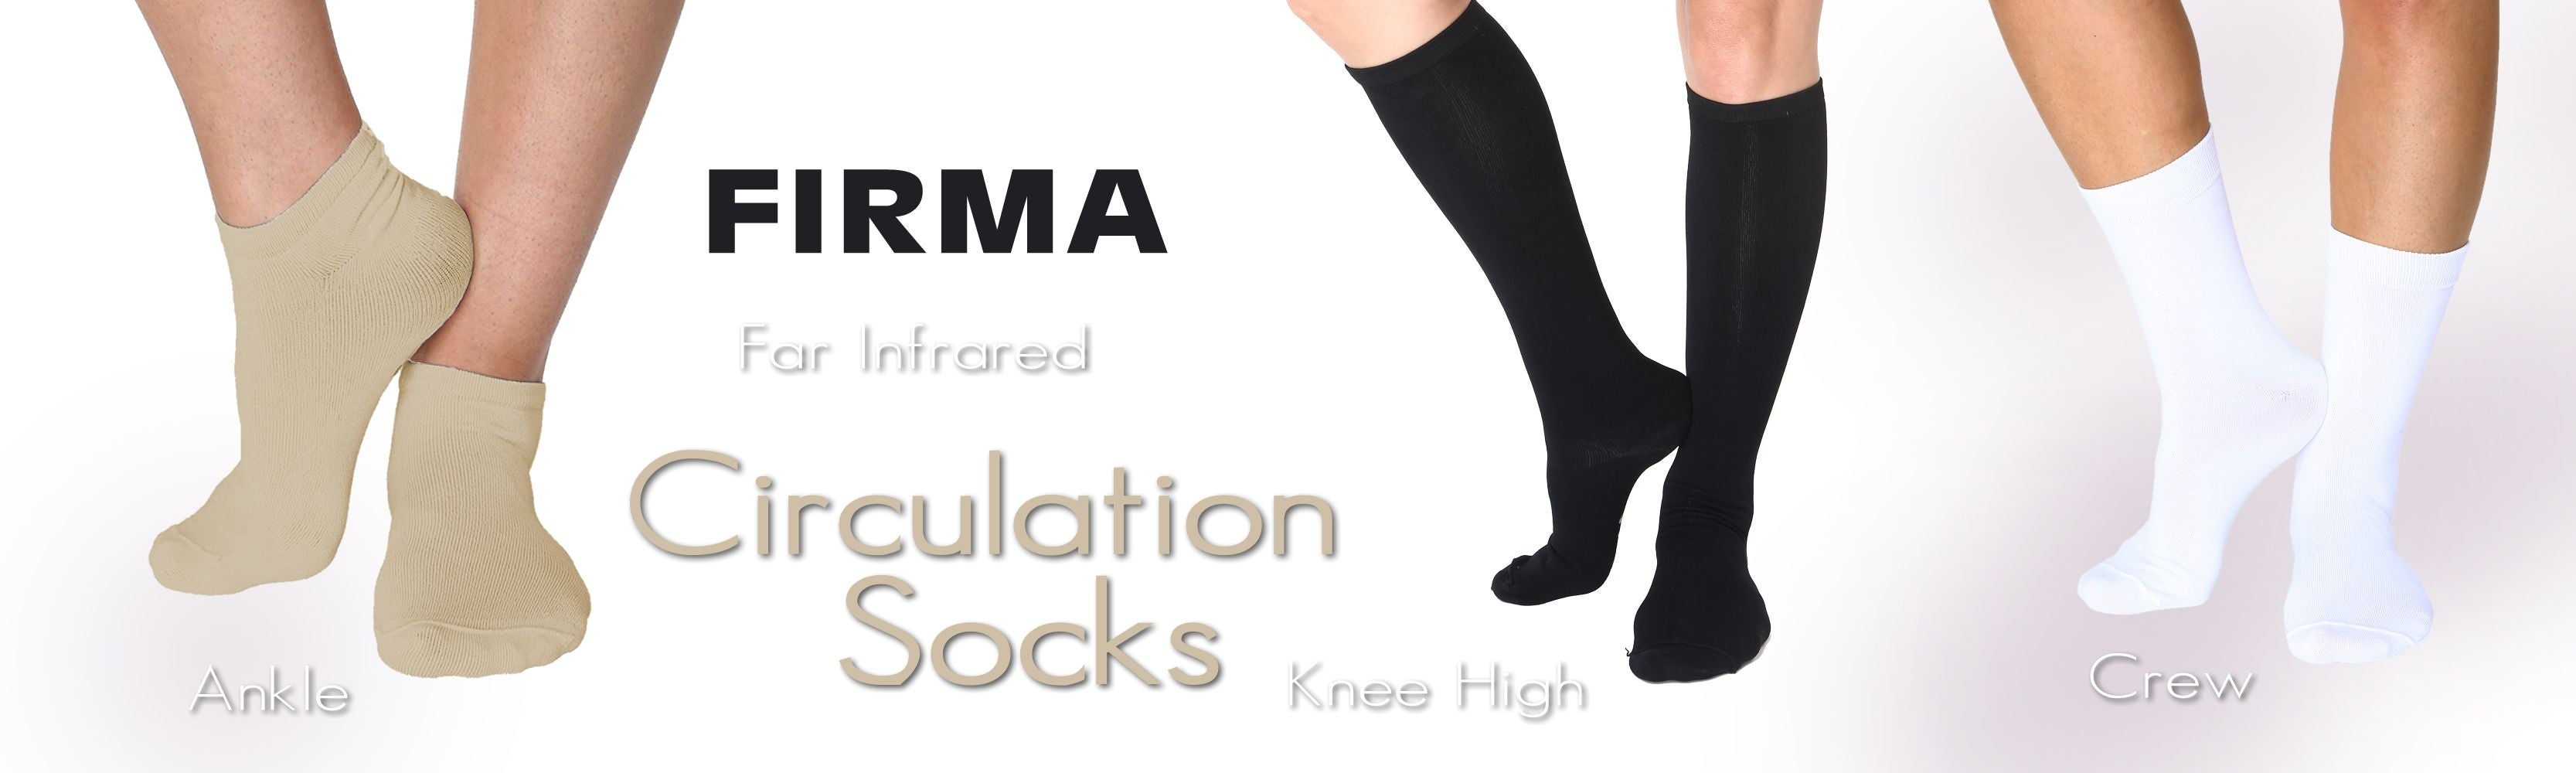 Firma Far Infrared Circulations Socks